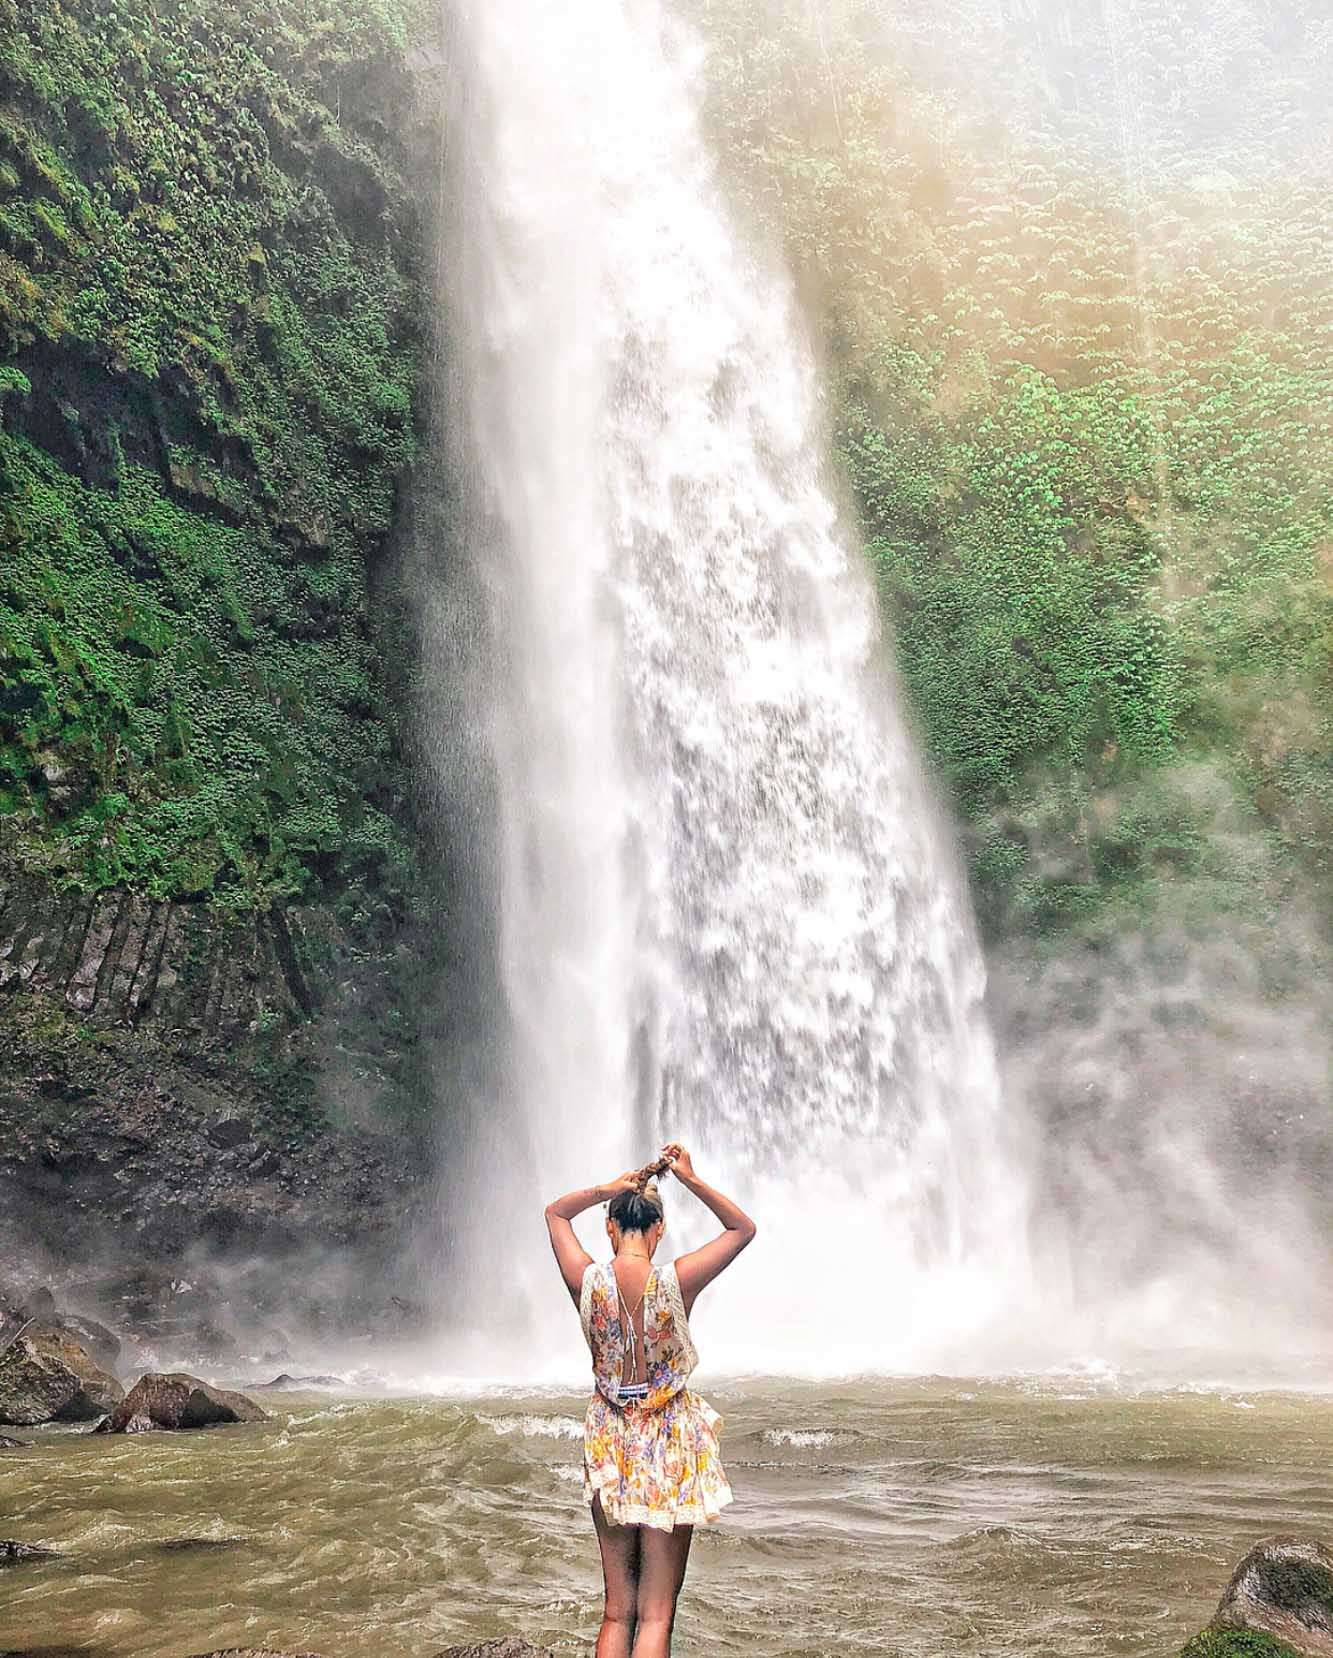 Nung Nung Waterfall - Best Waterfalls in Bali